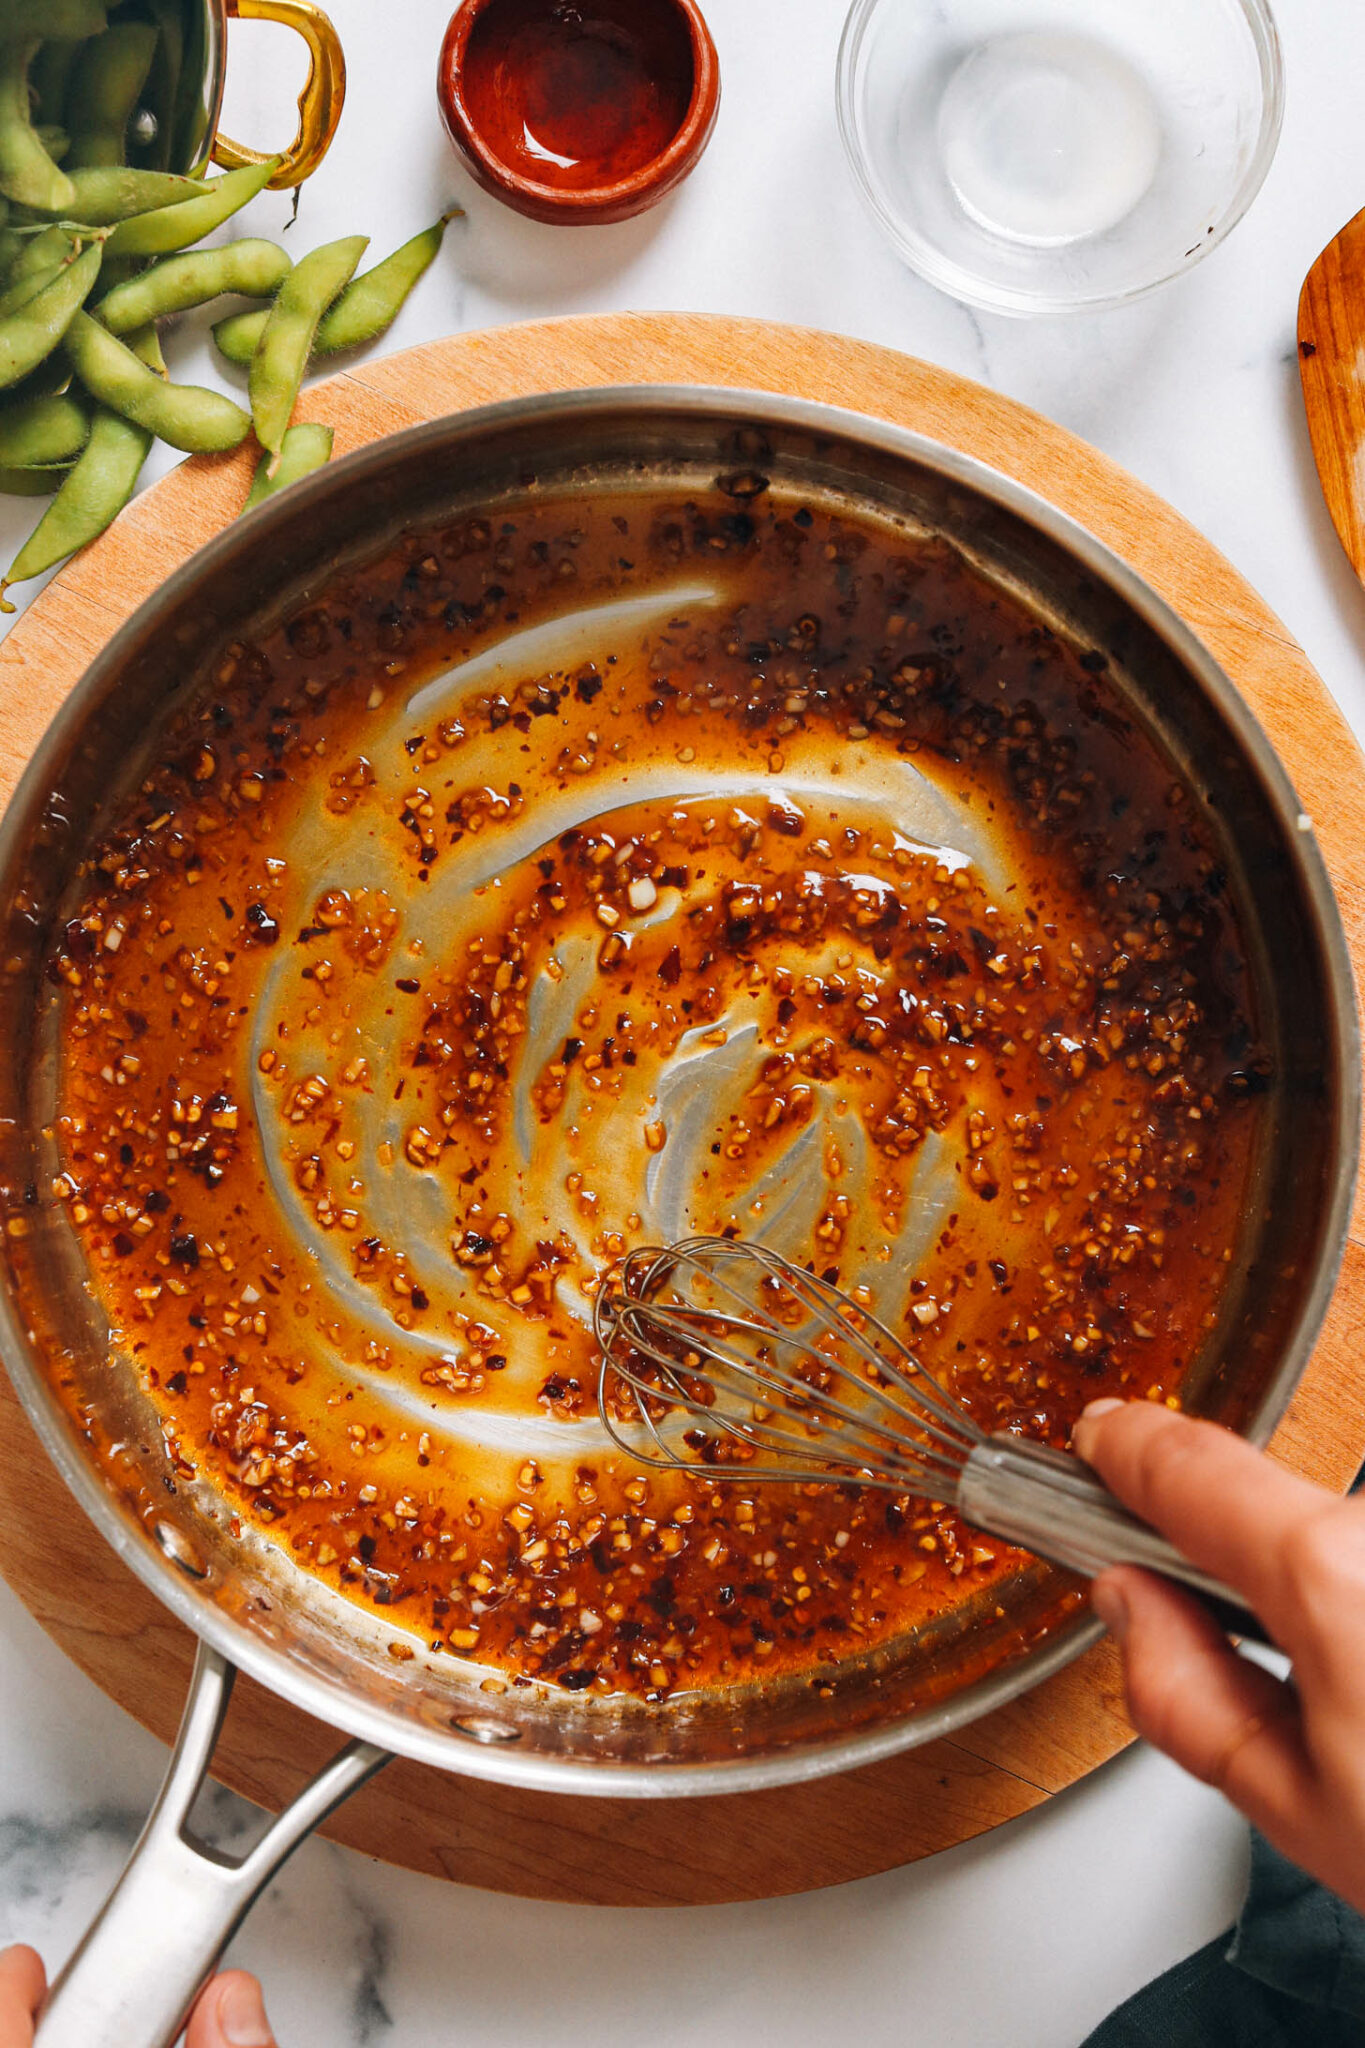 Spicy Garlic Edamame (The Ultimate Appetizer!) - Minimalist Baker